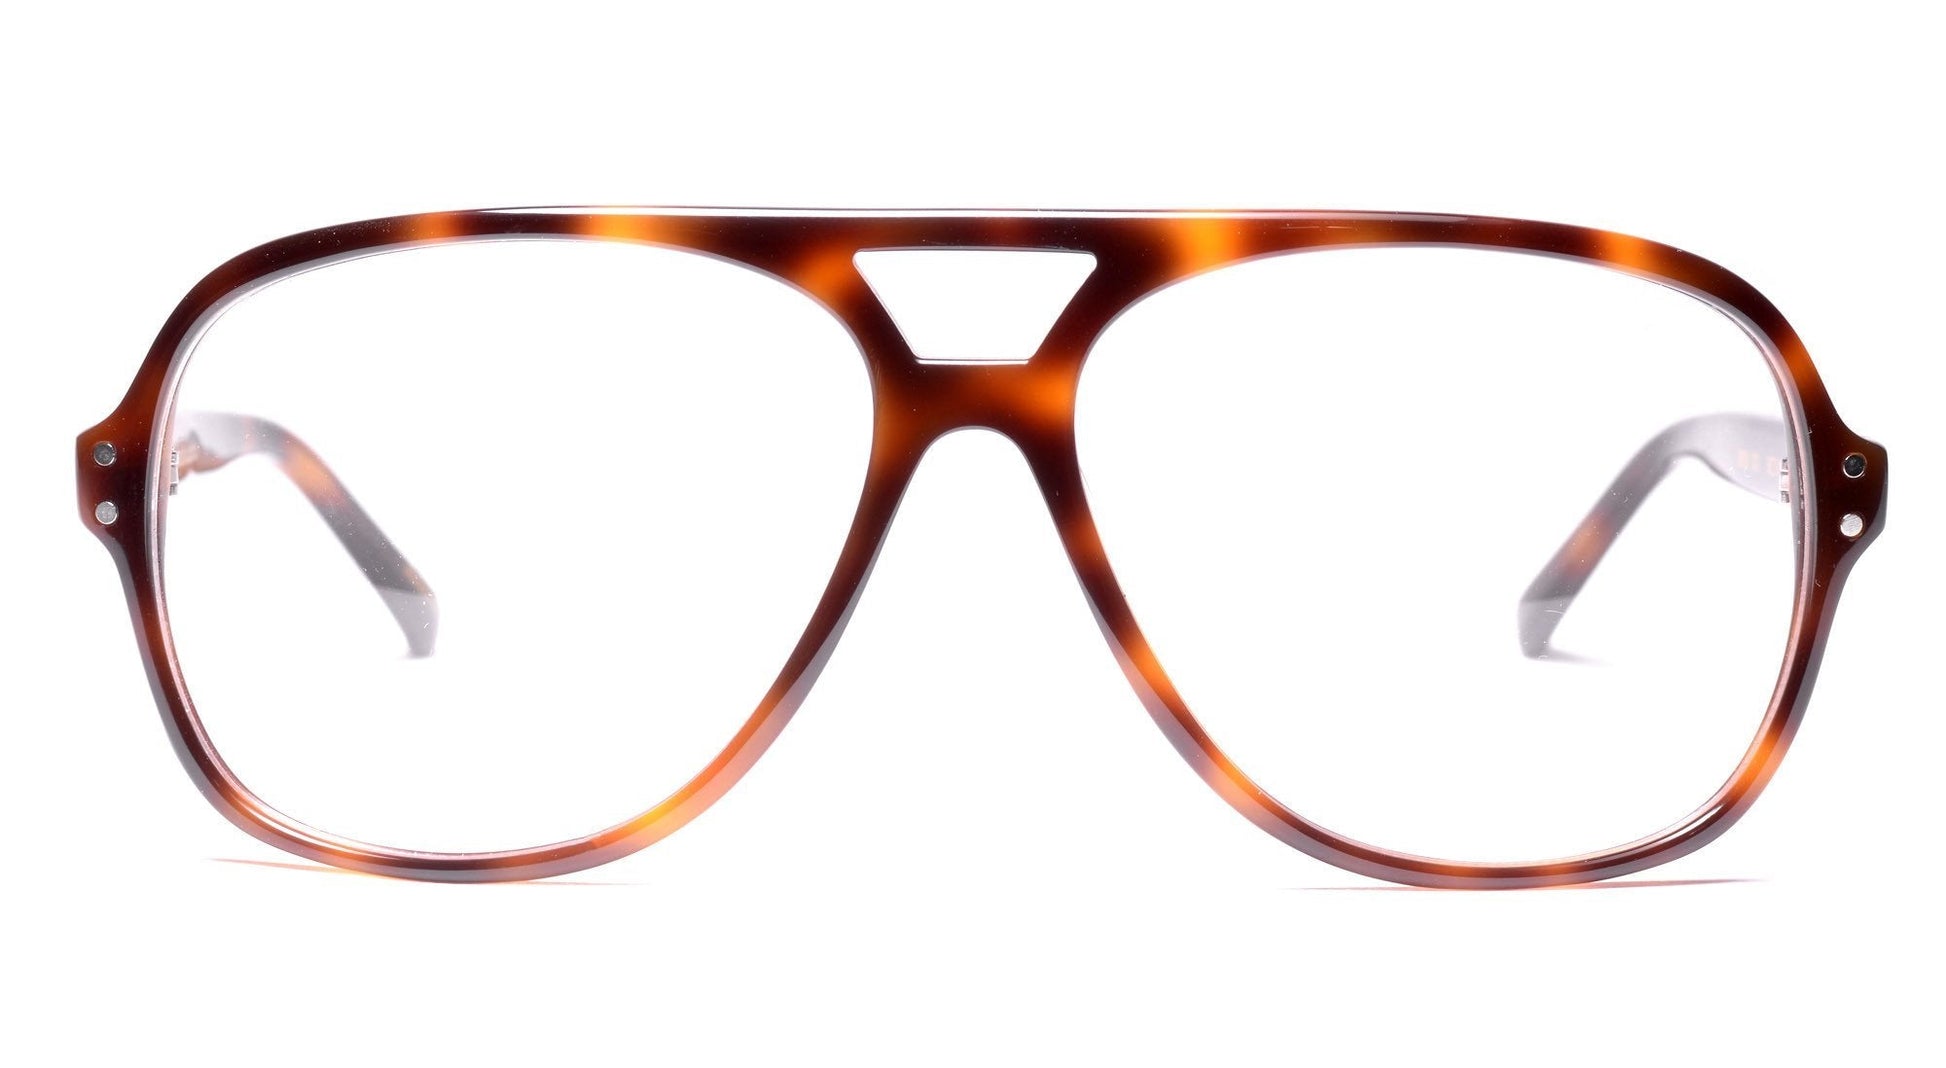 LDNR Heron Glasses (Tortoiseshell)